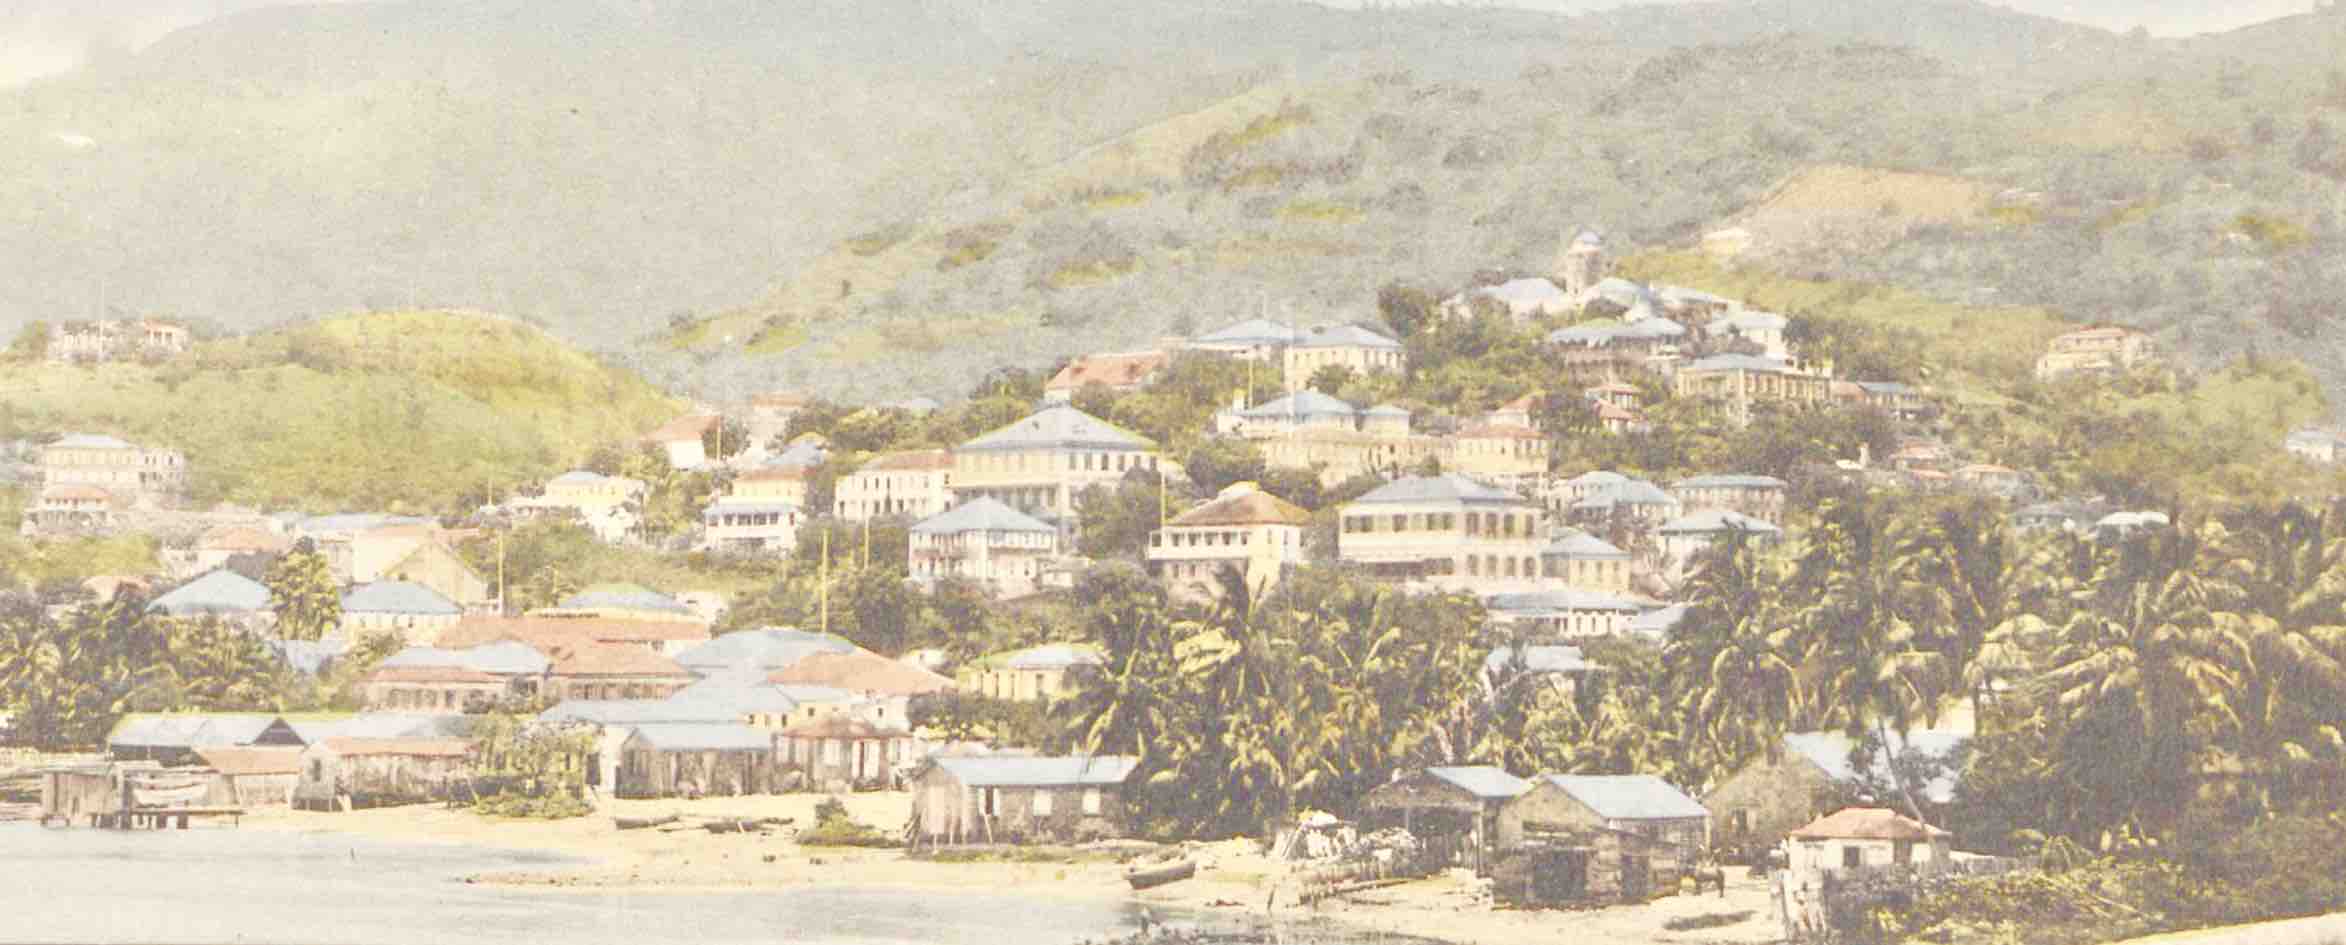 St. Thomas, US Virgin Islands, Danish West Indies history